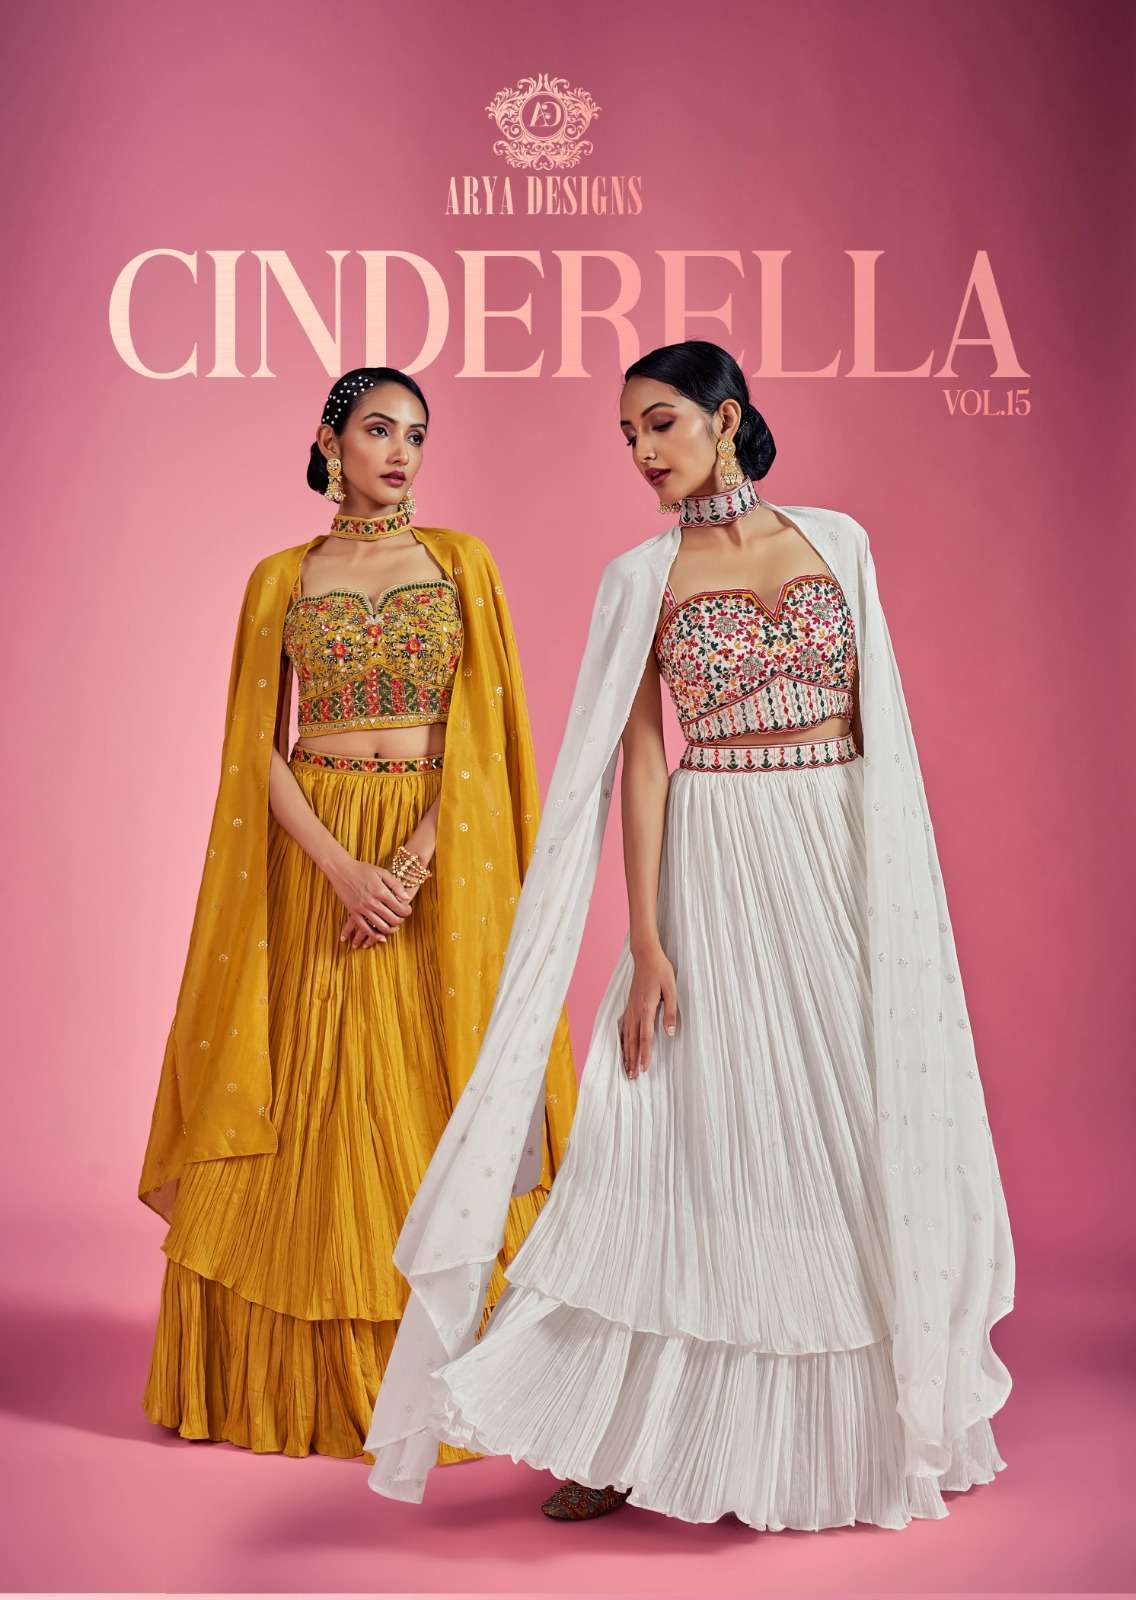 arya designs cinderella vol 15 series 53001-53003 chinon lehenga